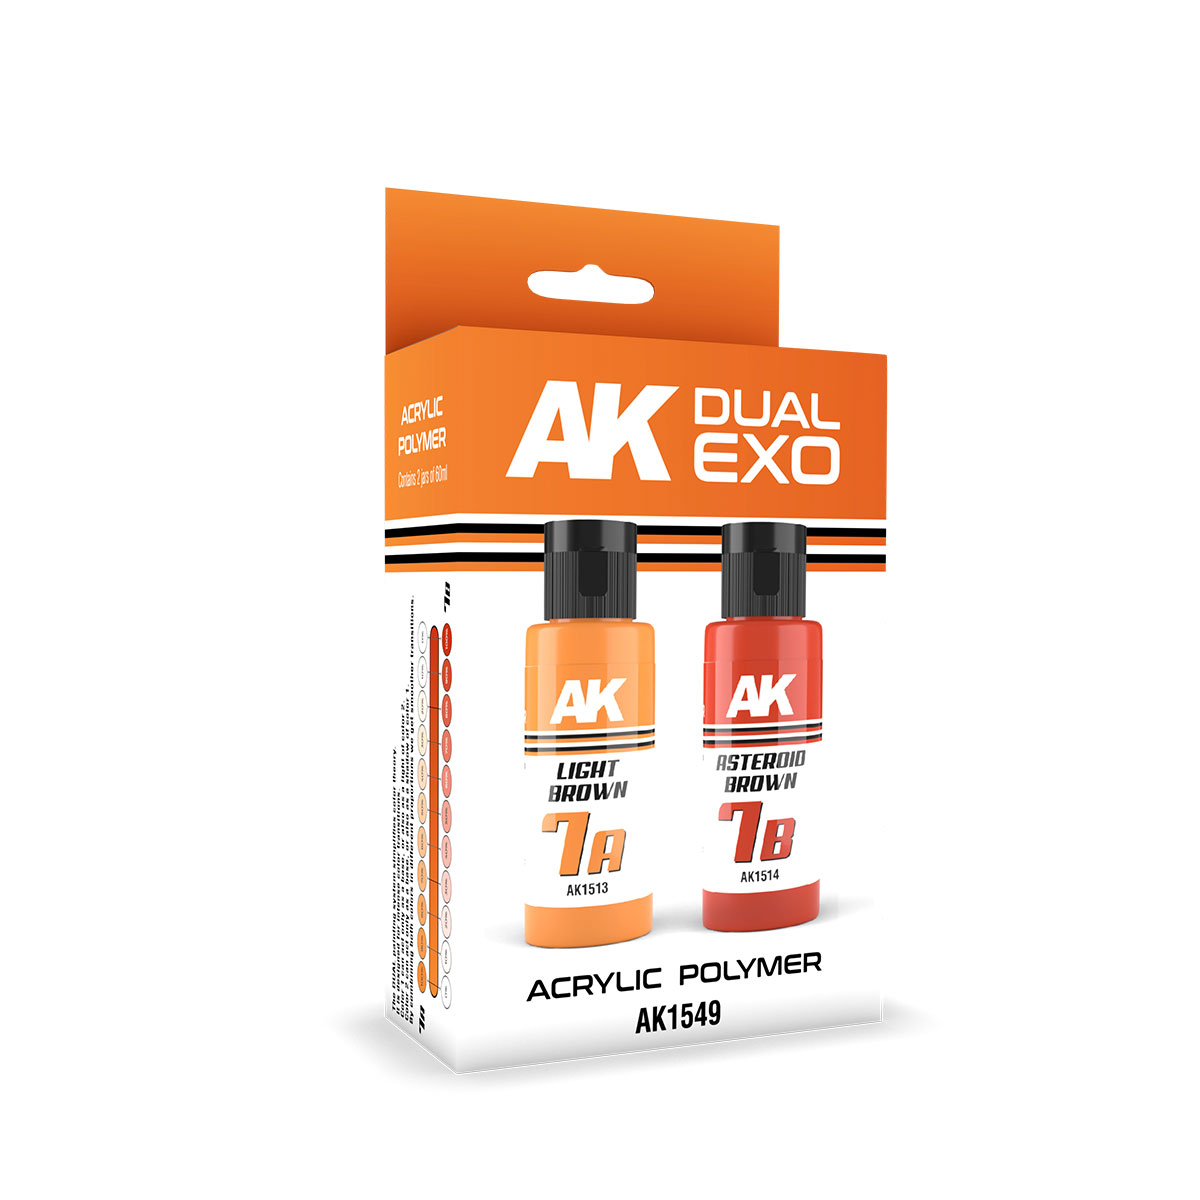 AK Interactive LIGHT BROWN & ASTEROID BROWN DUAL EXO Set 7